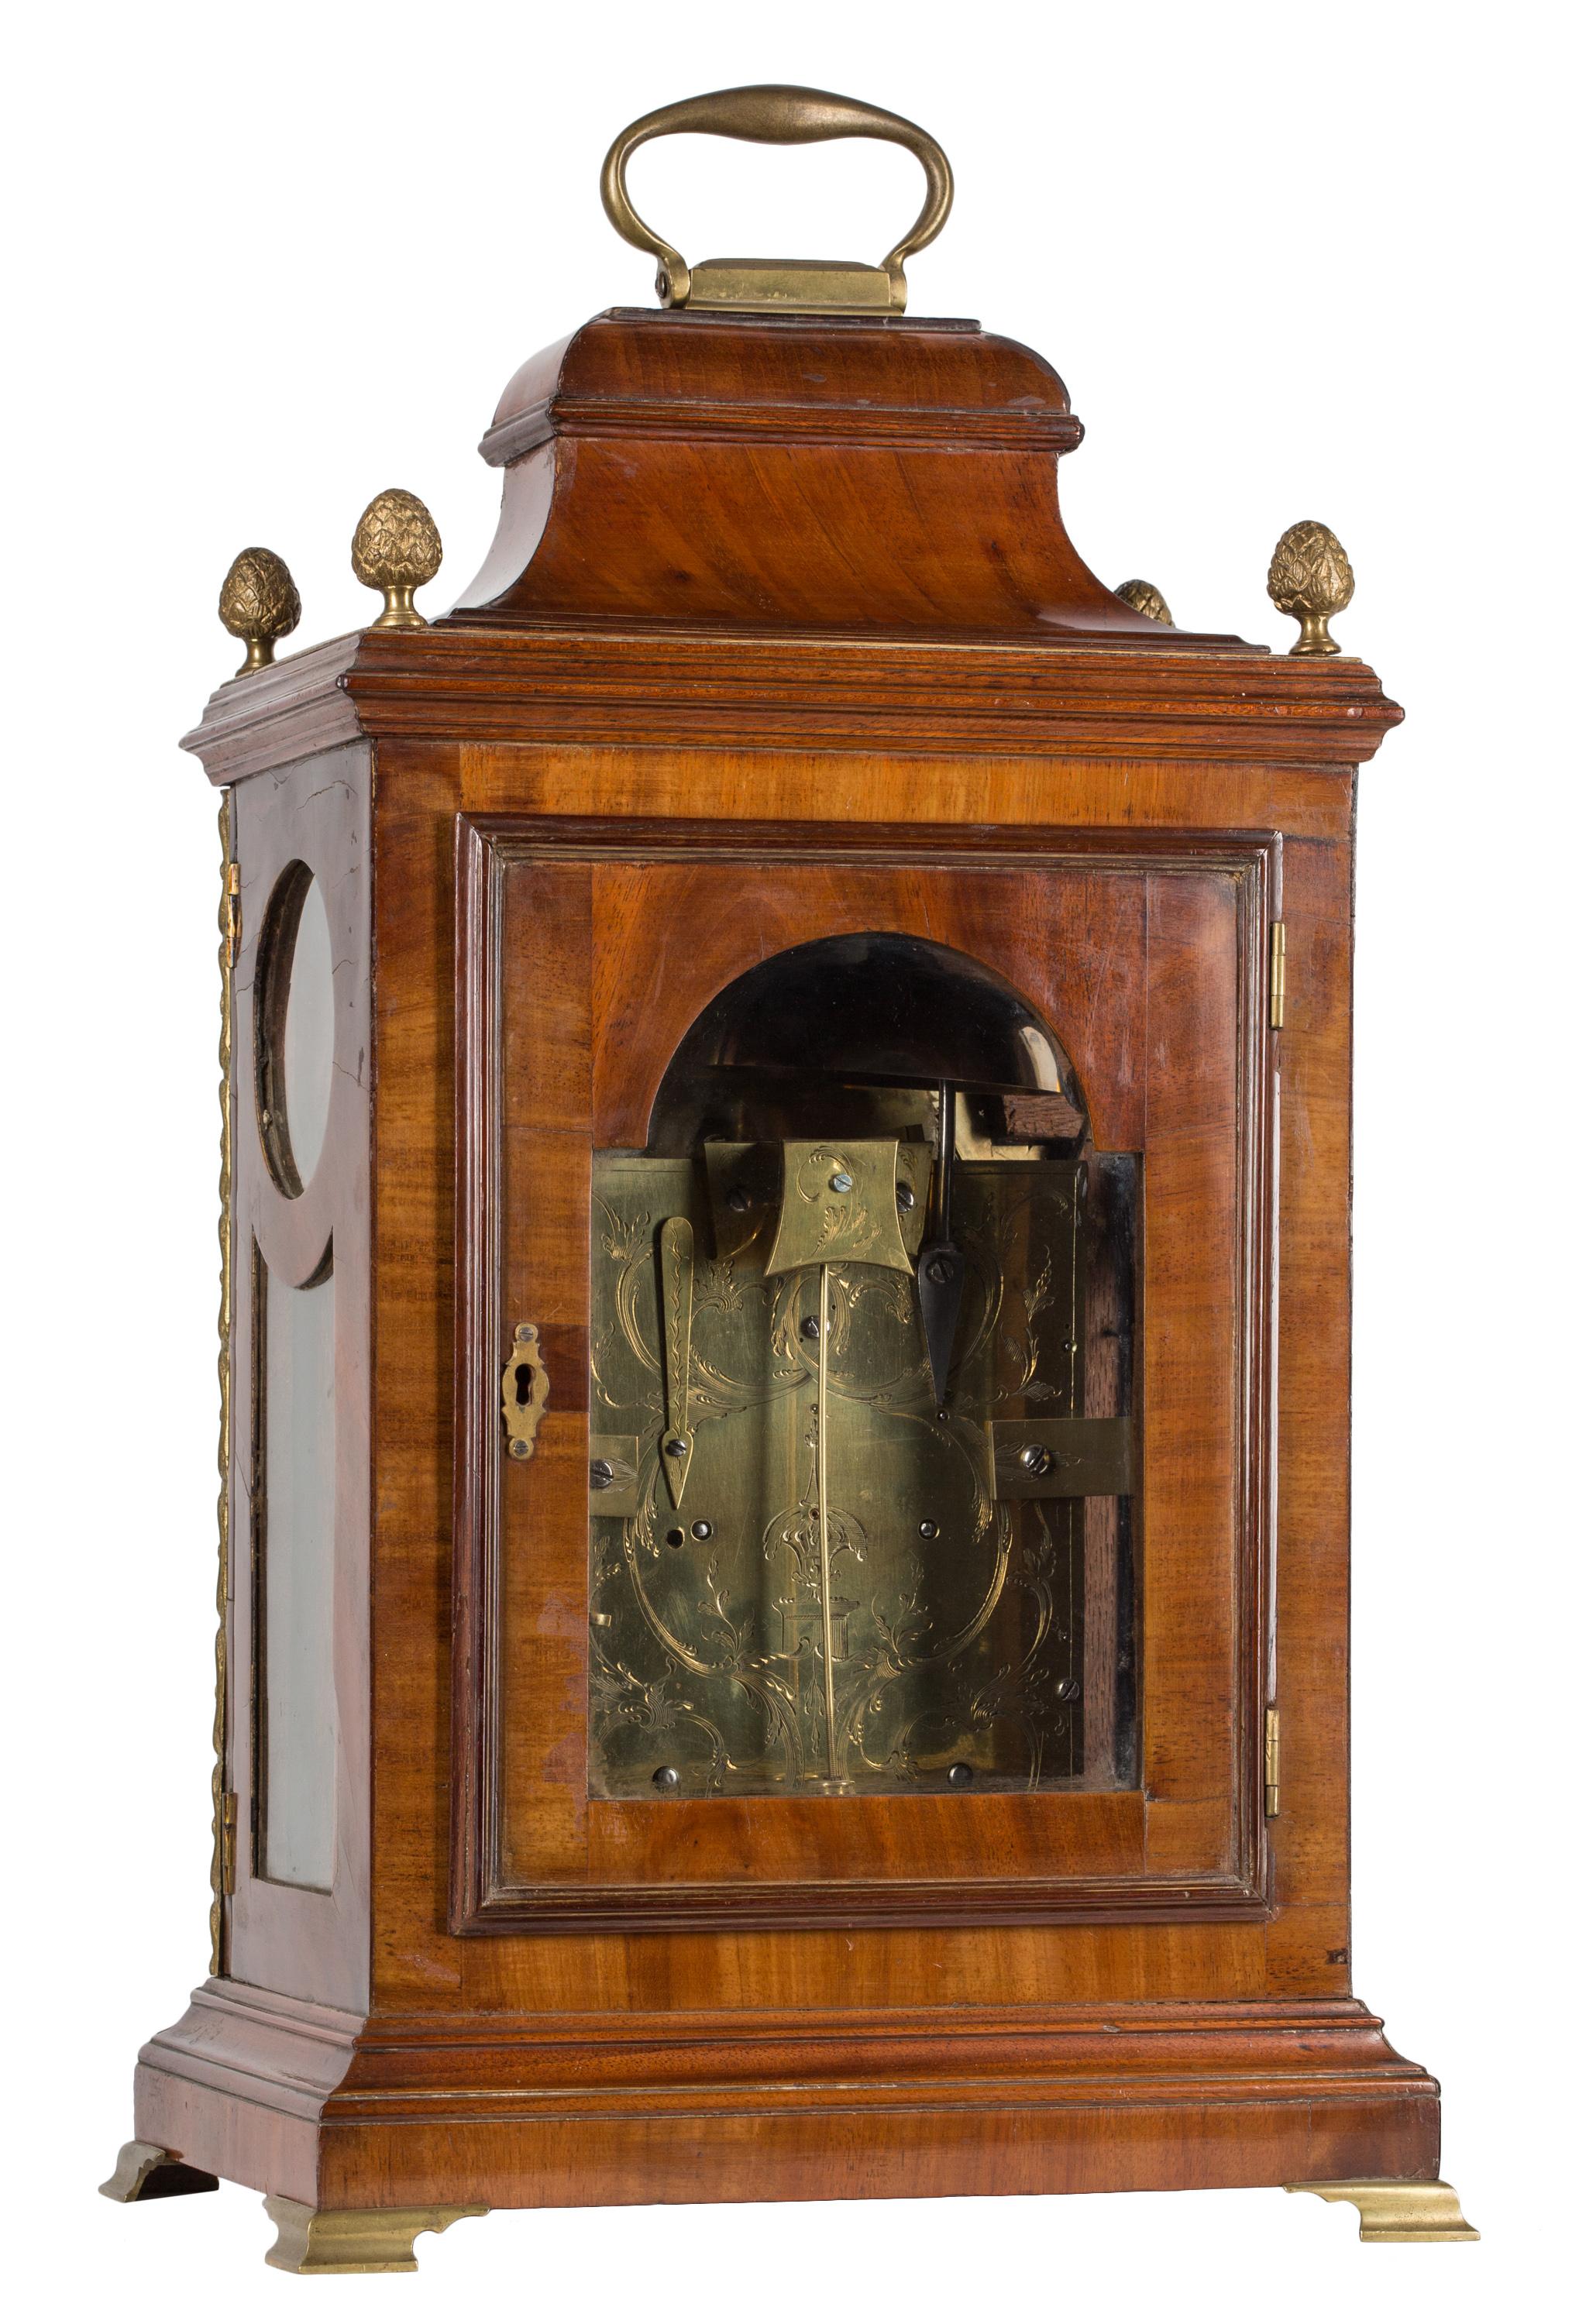 Brass 18th Century Moon Phase Dial Bracket Clock by Trewinnard of London